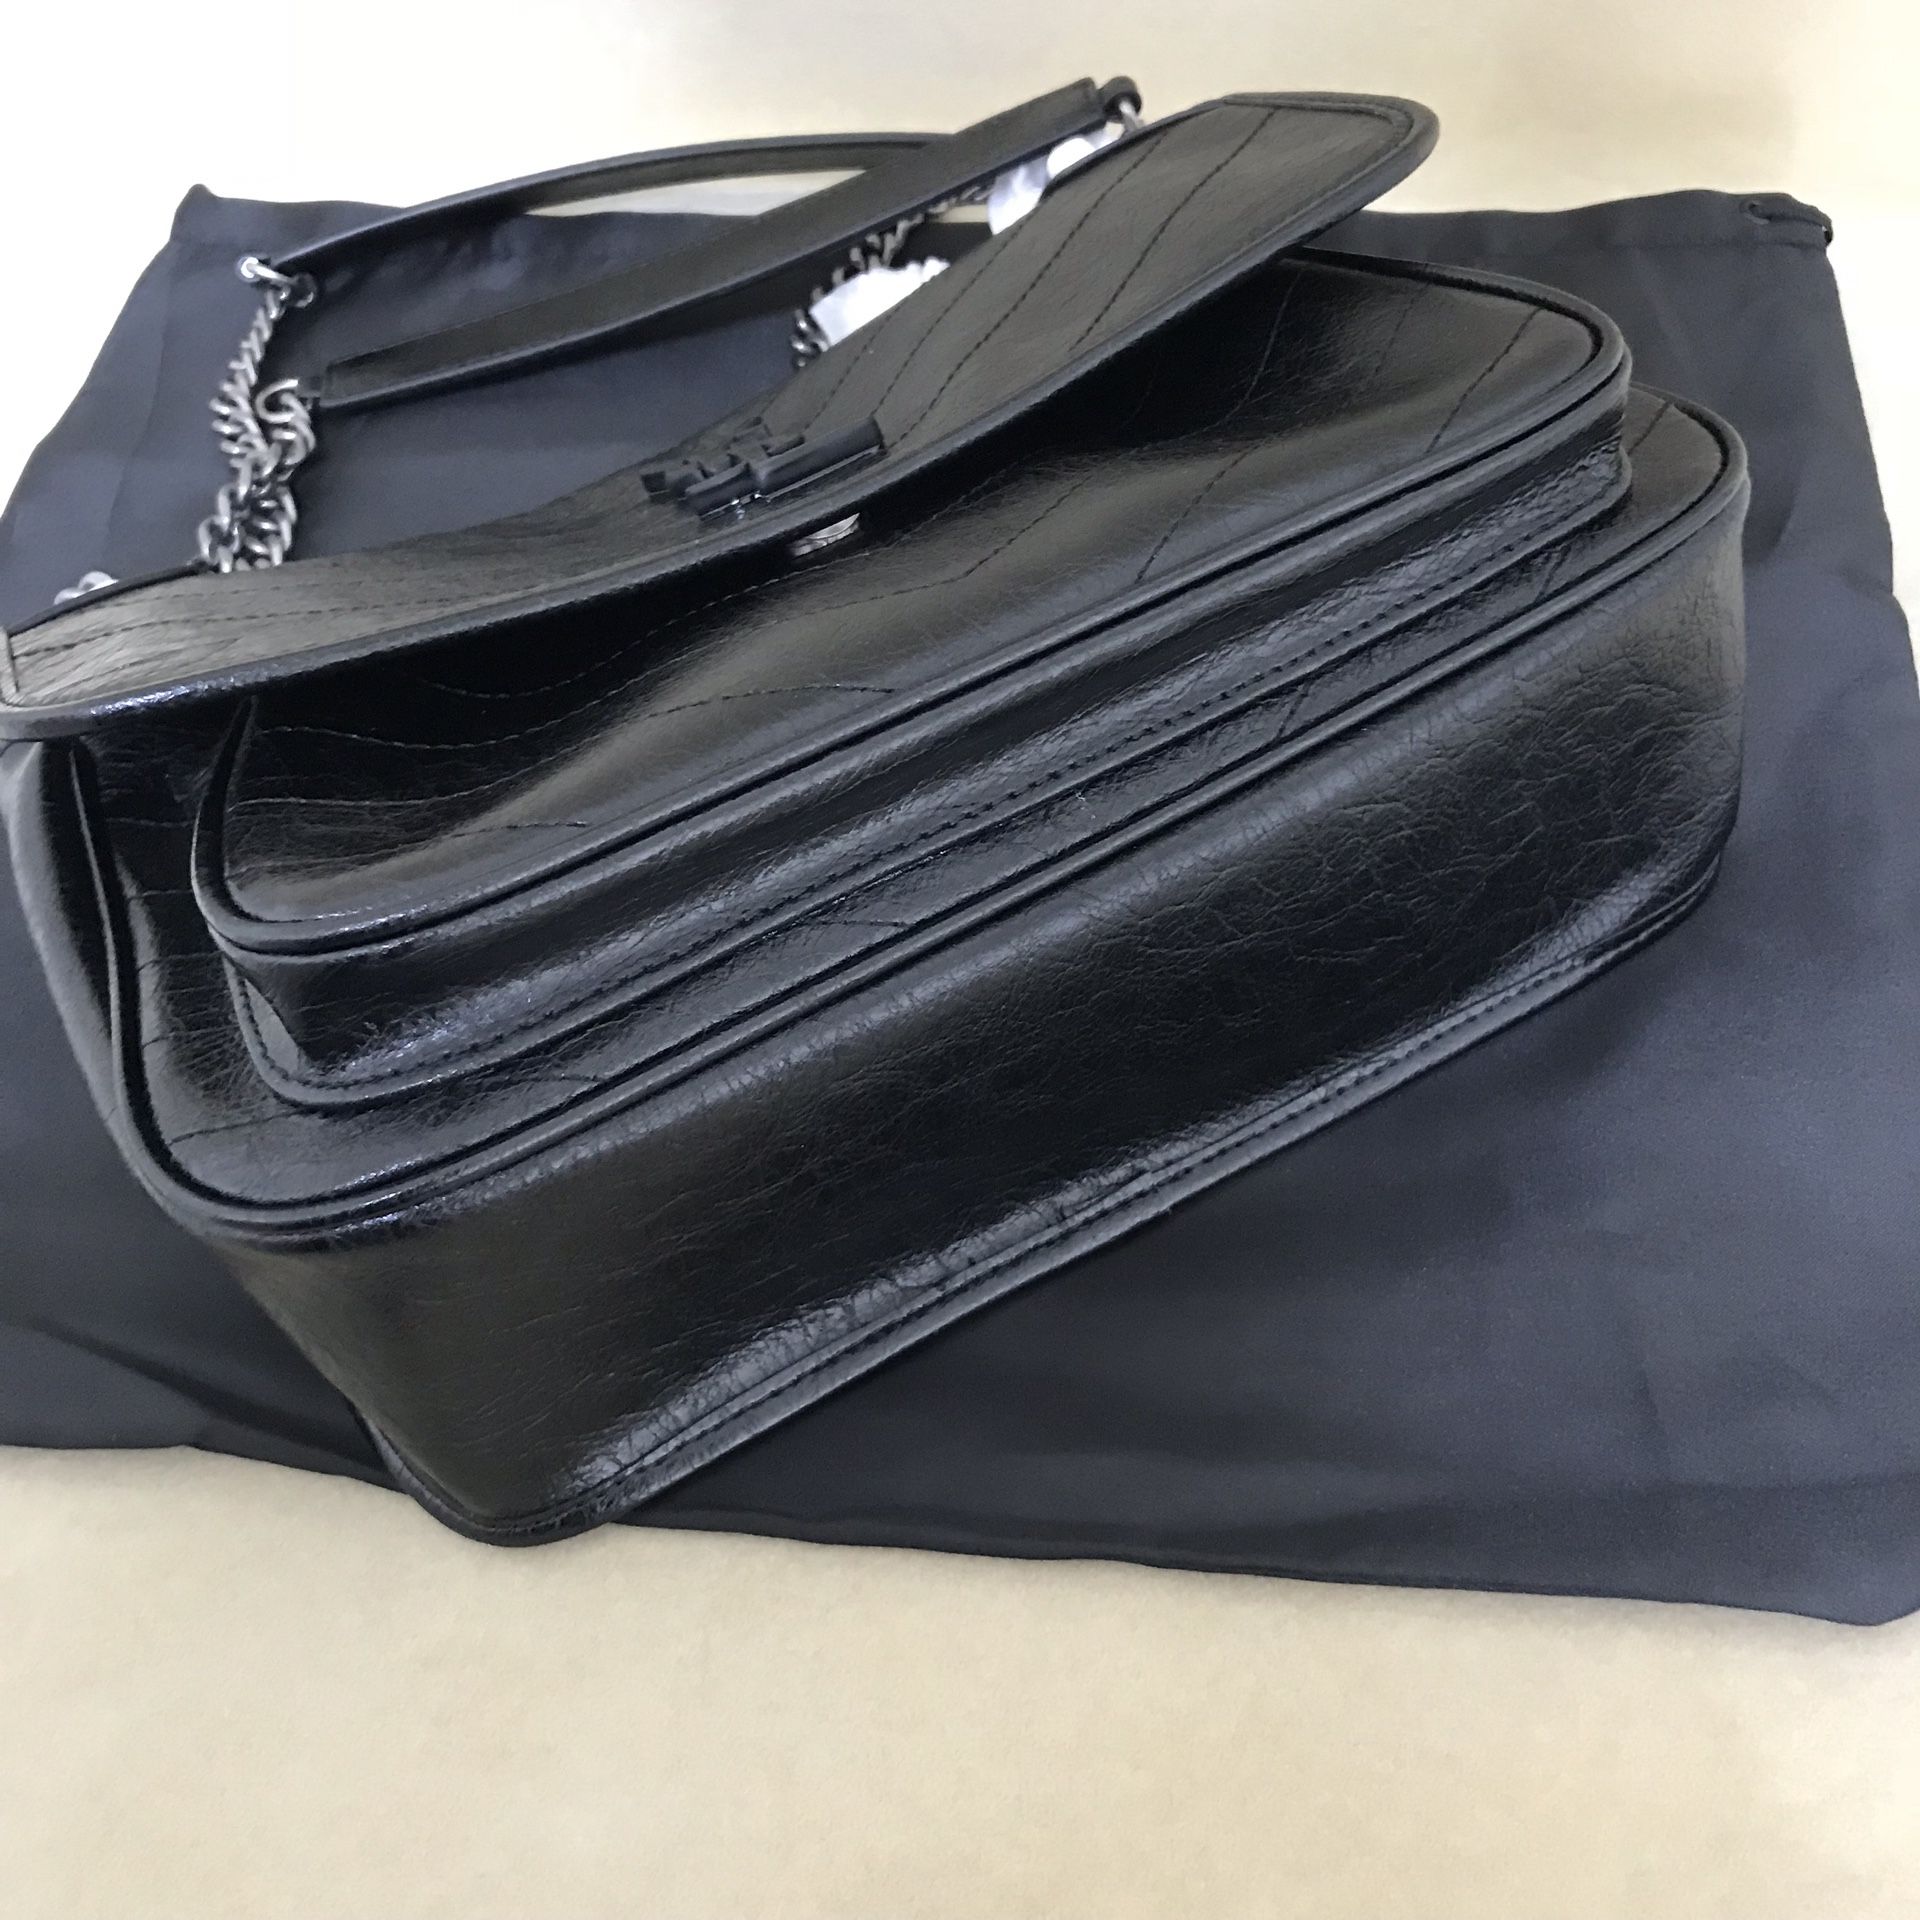 YSL Yves Saint Laurent Niki Bag Medium Size for Sale in Spring, TX - OfferUp